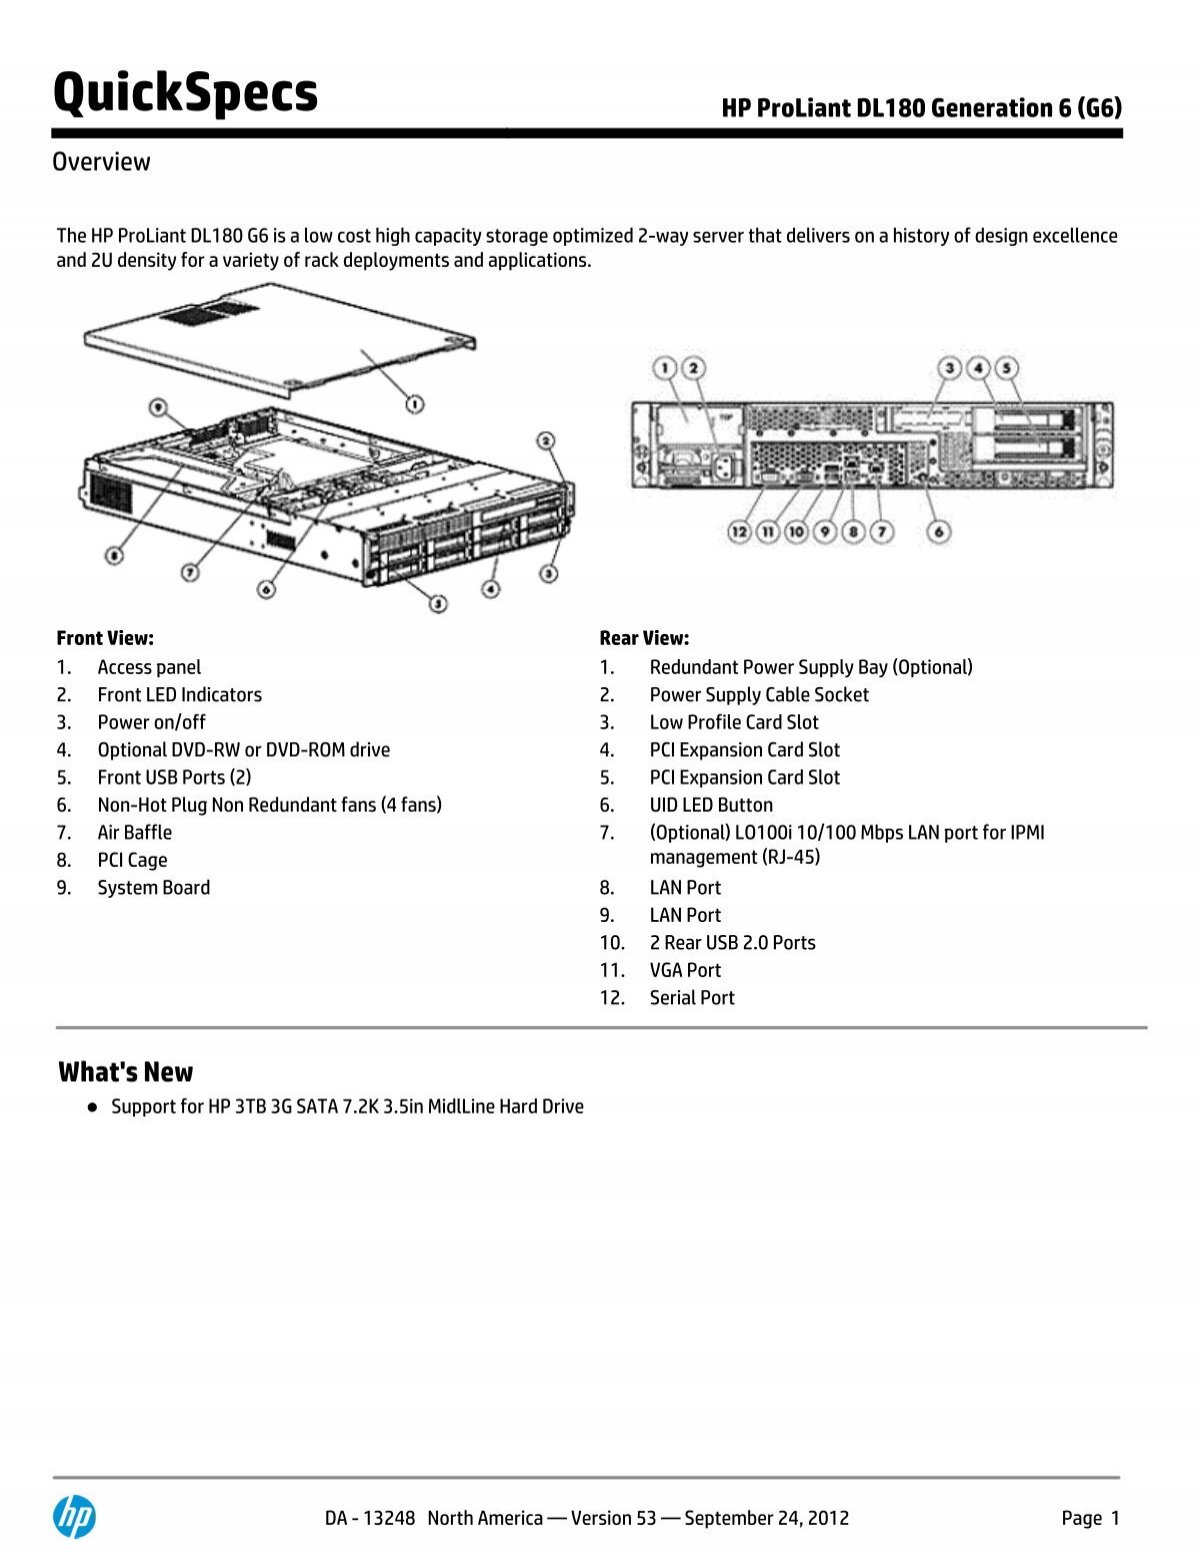 HP ProLiant DL180 Generation 6 (G6) - Hewlett Packard